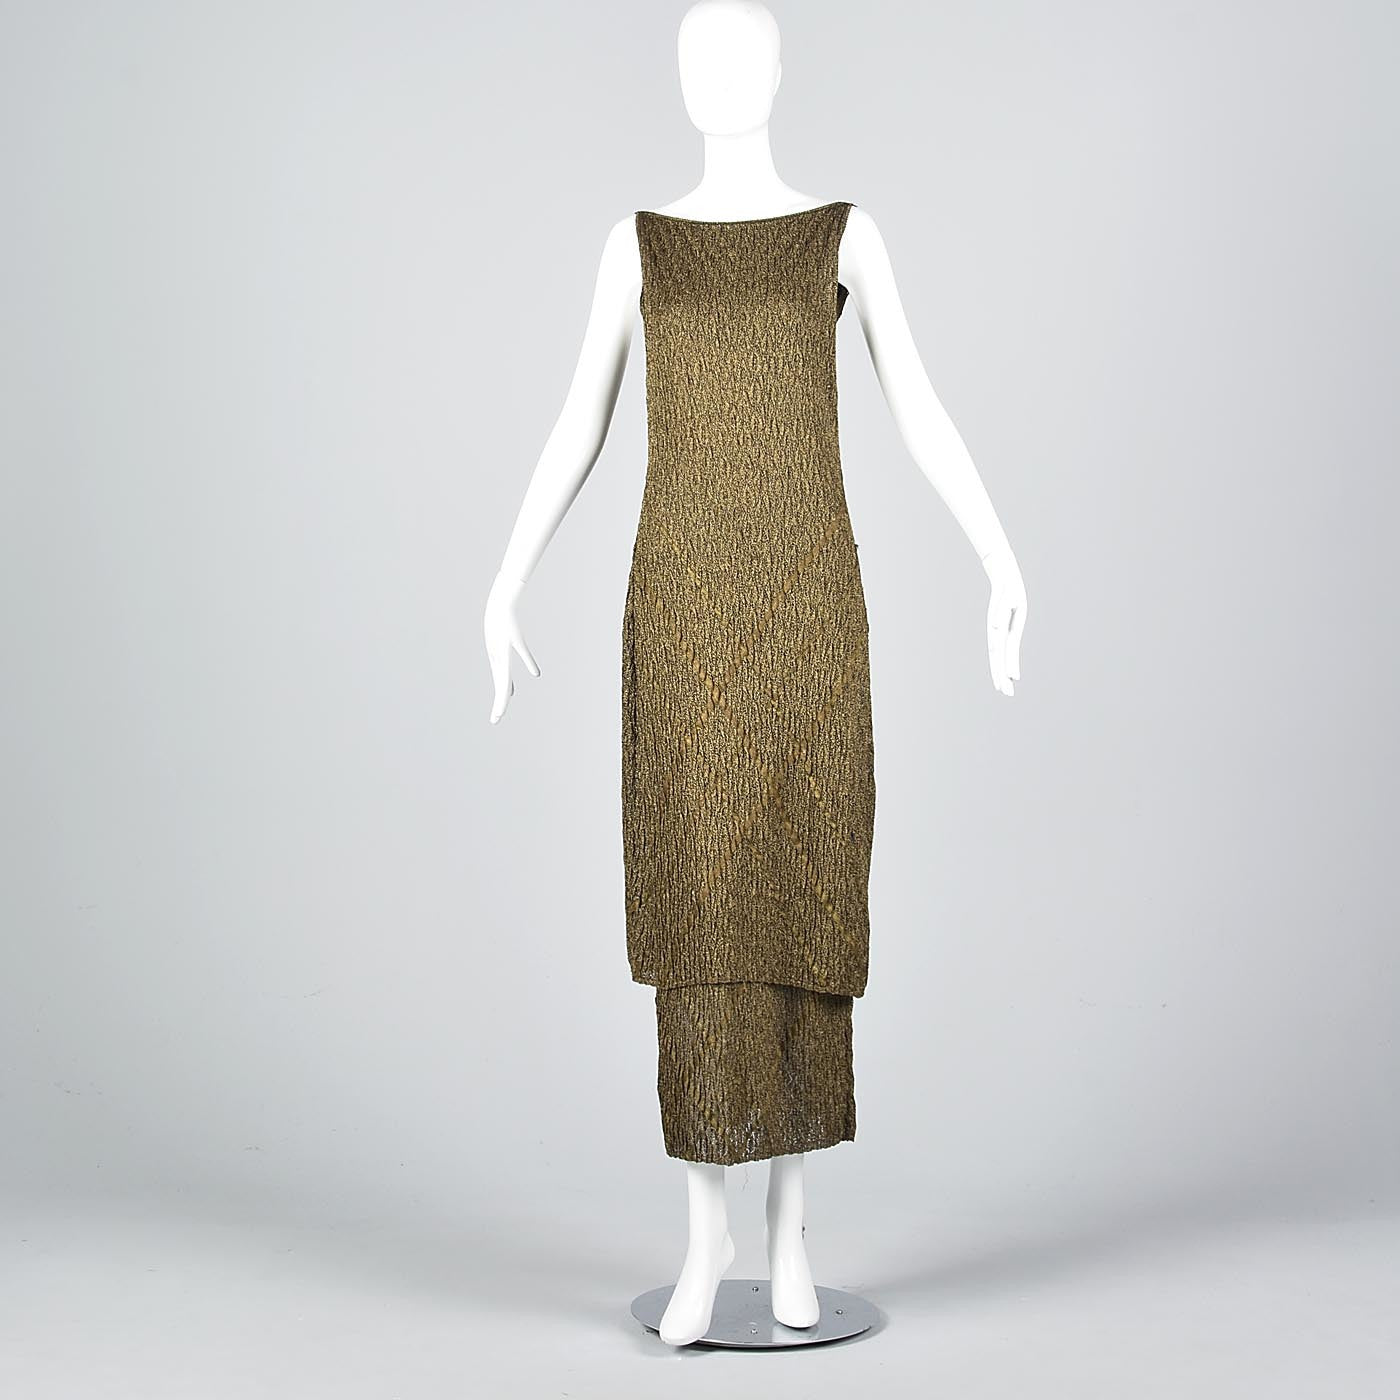 Christian Dior Boutique John Galliano Metallic Gold Evening Dress